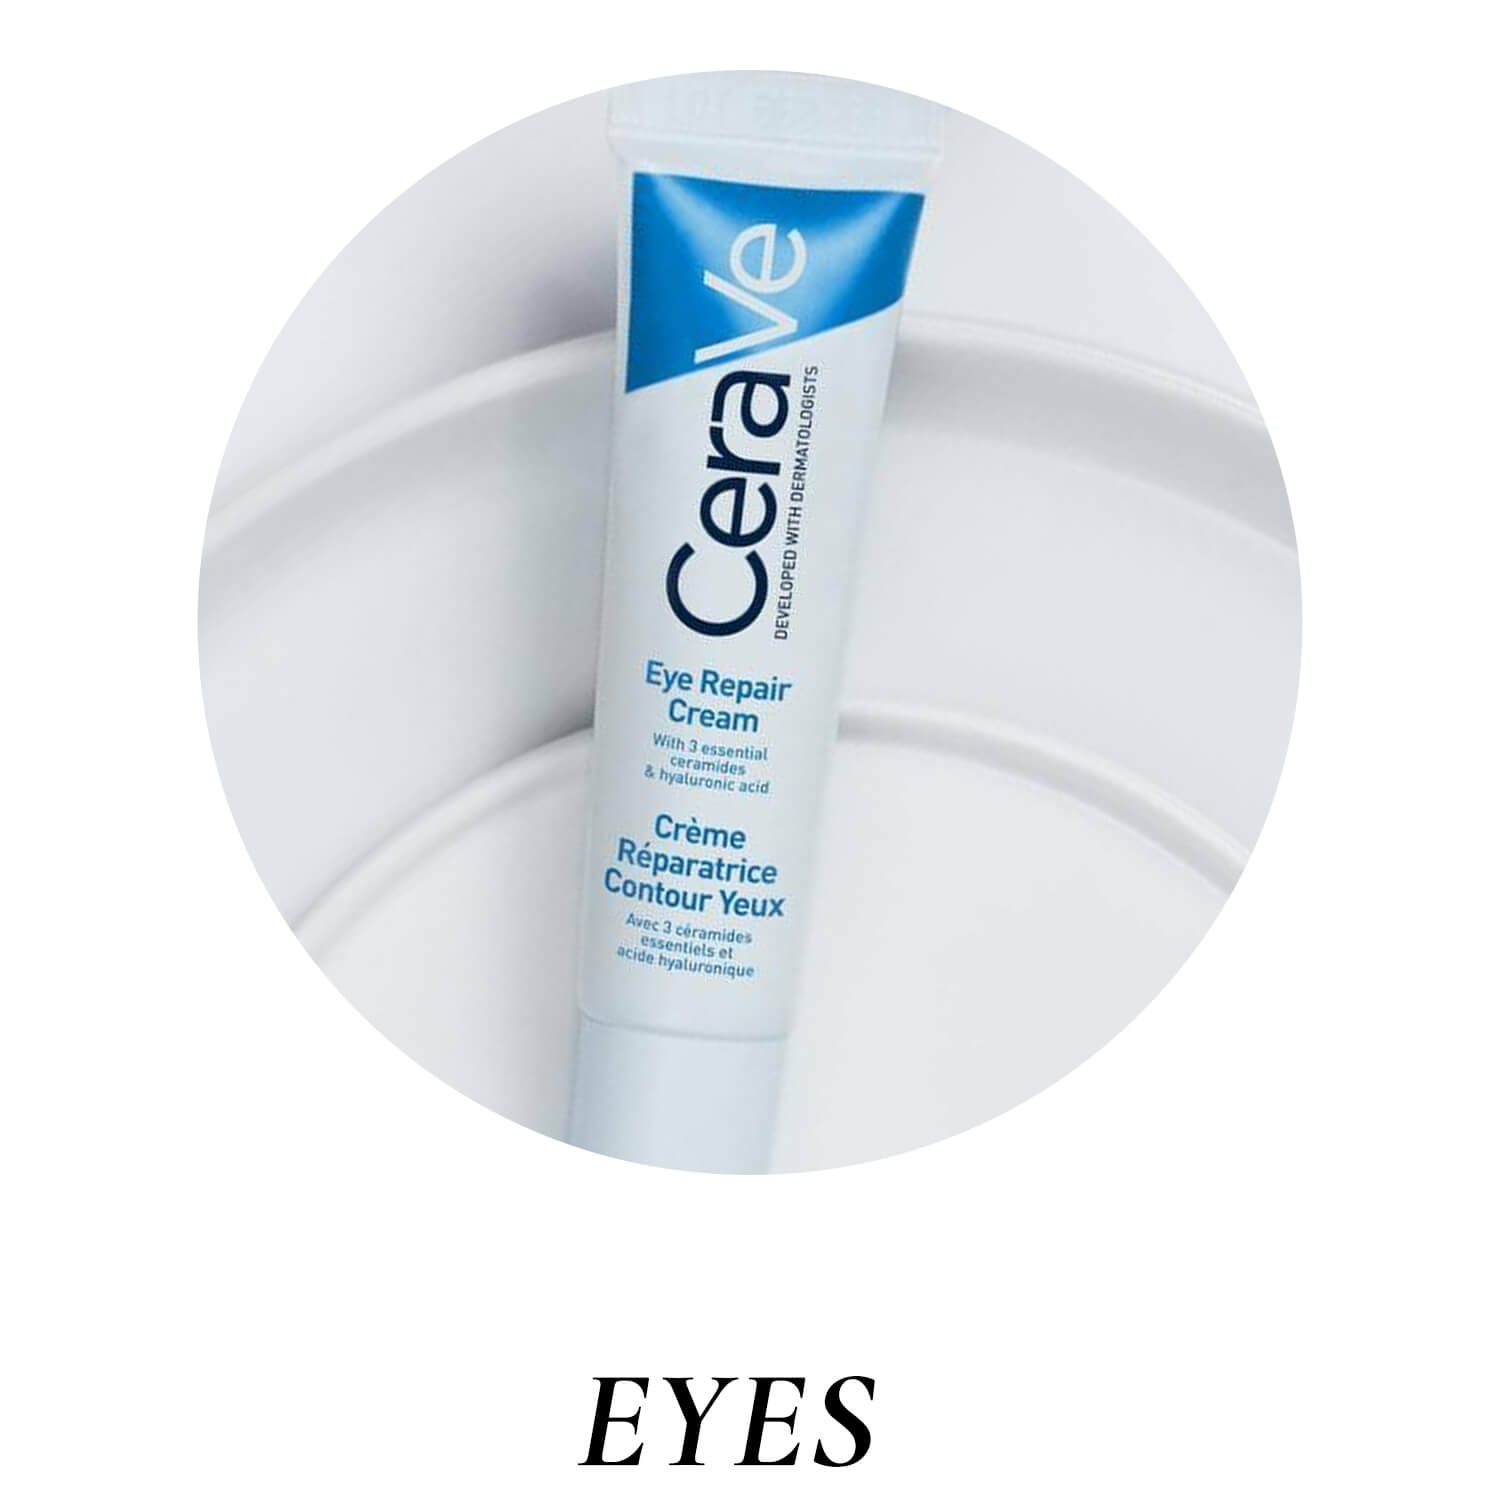 CeraVe Eye Care